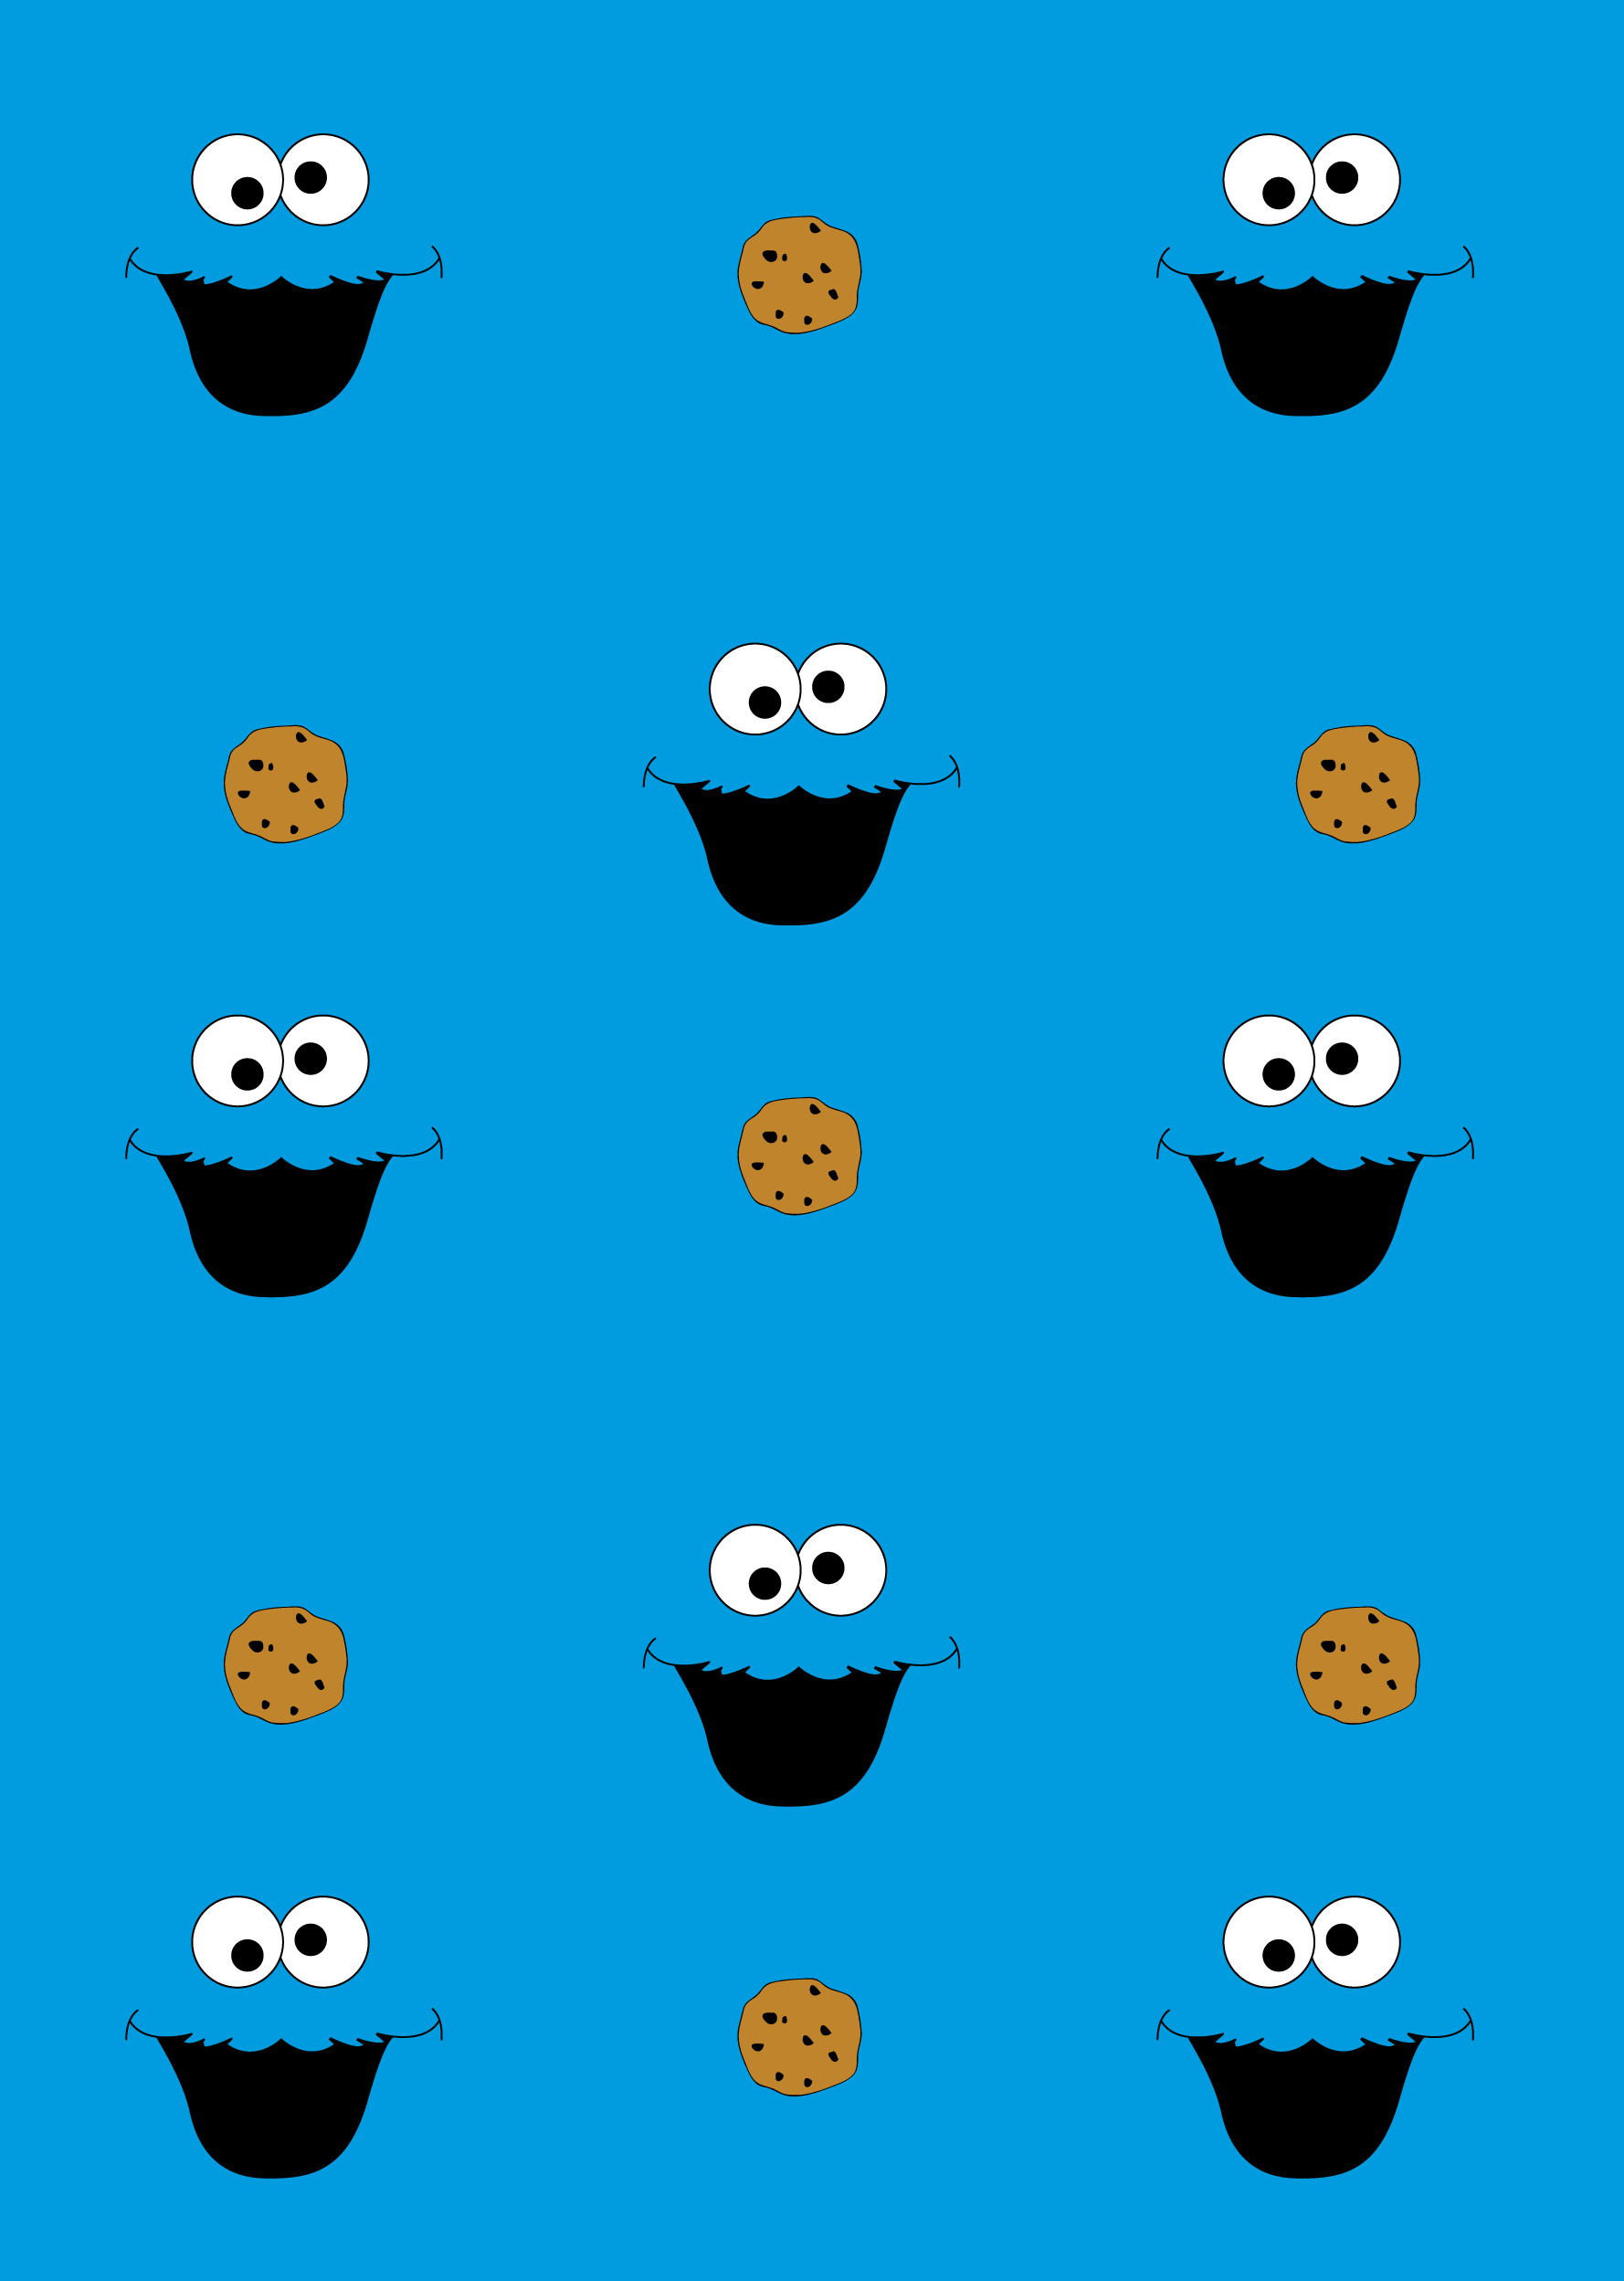 Cookie Monster (Sesame Street) Wallpapers (24+ images inside)